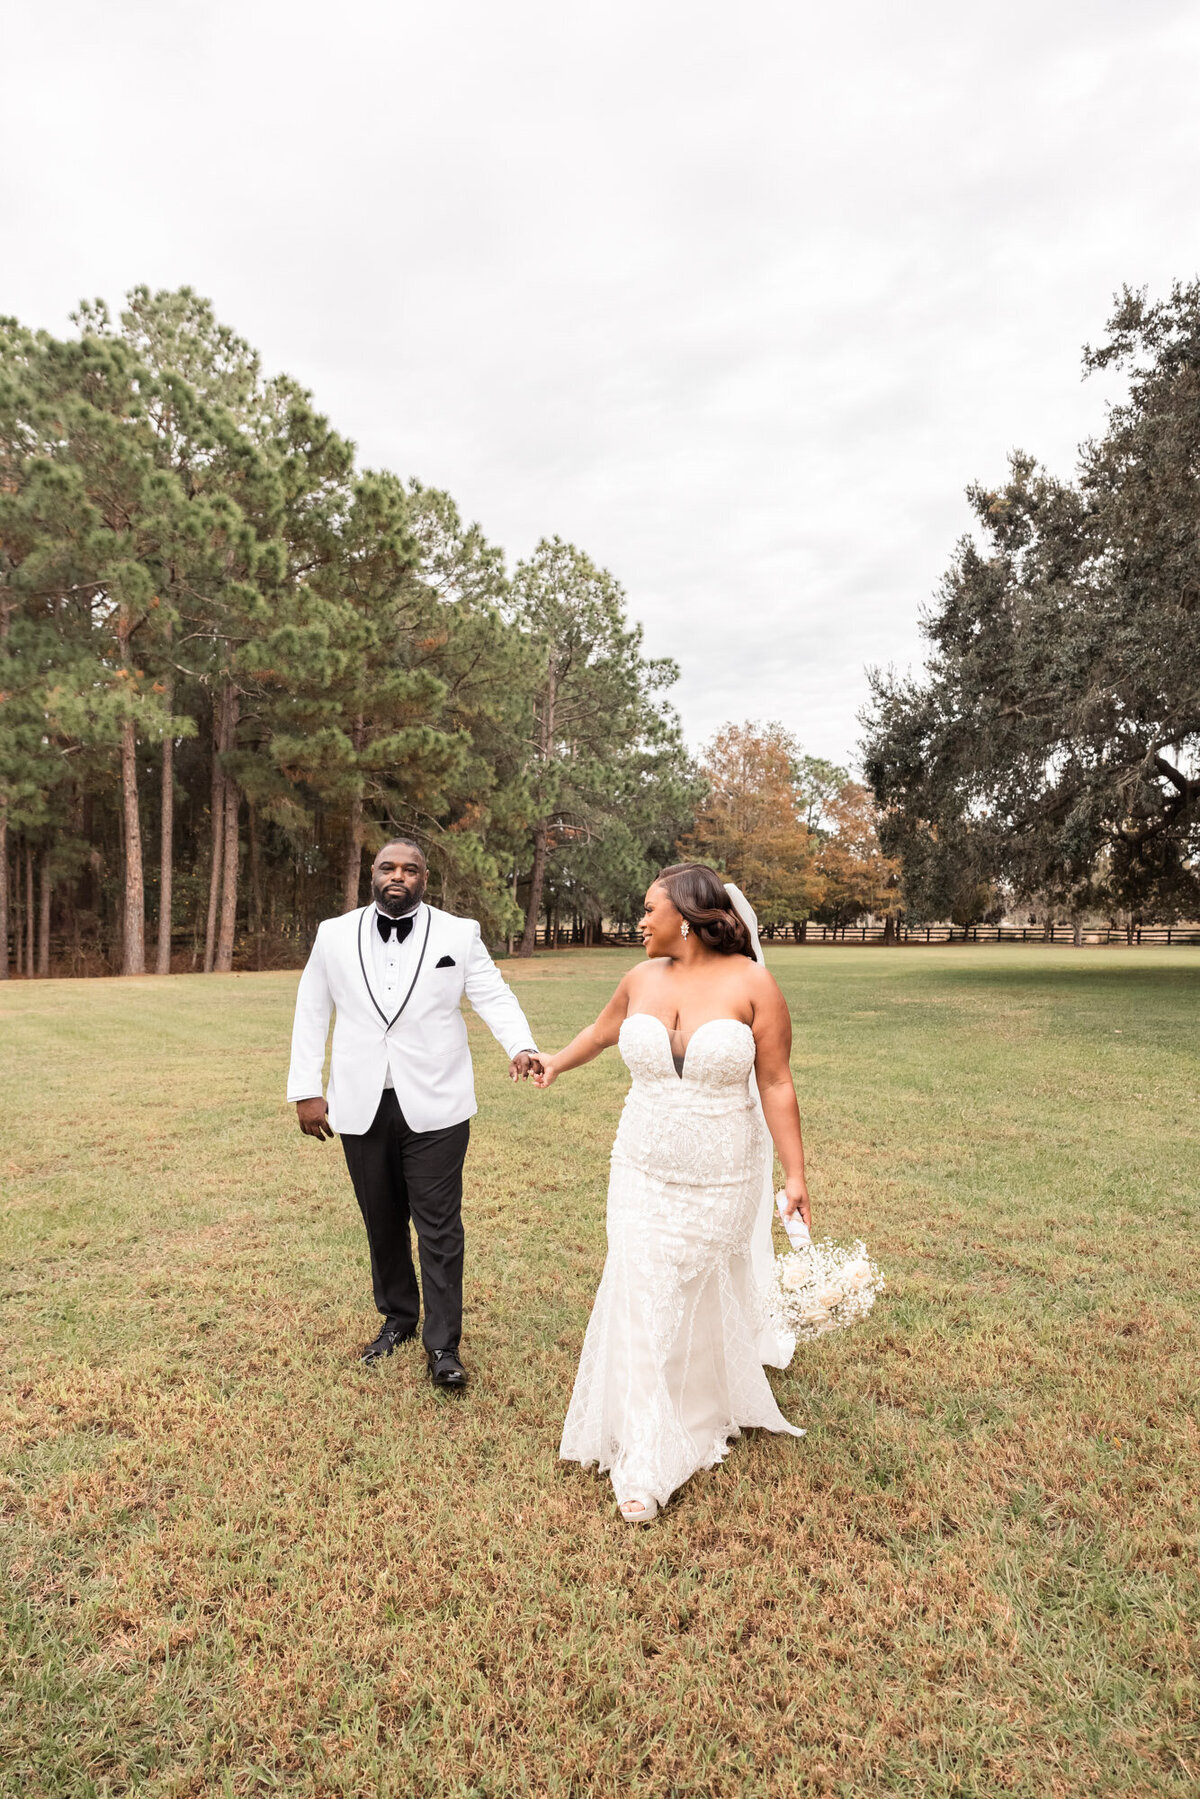 Michael and Mishka-Wedding-Green Cabin Ranch-Astatula, FL-FL Wedding Photographer-Orlando Photographer-Emily Pillon Photography-S-120423-279